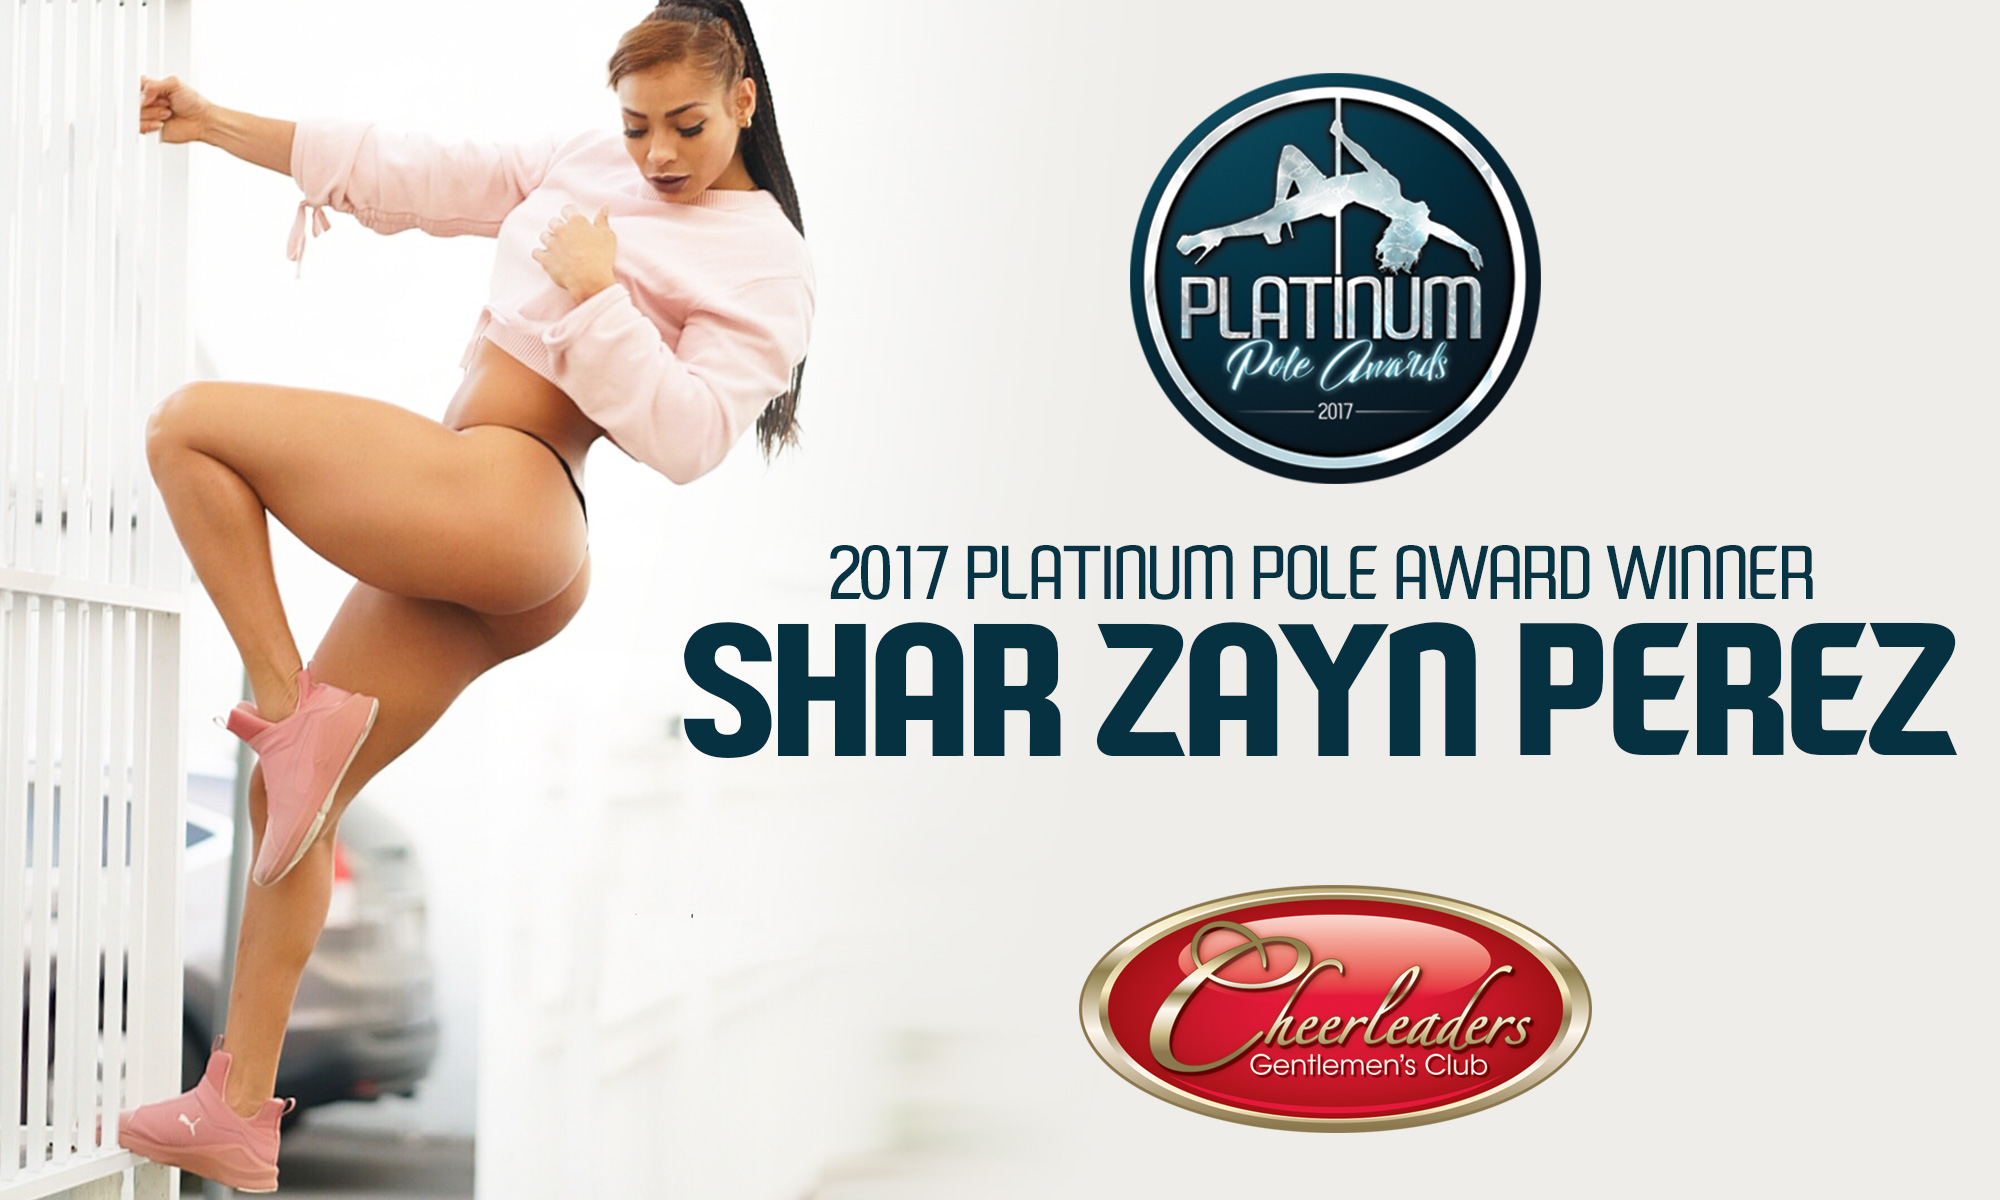 Shar Zayn Perez - Cheerleaders Philadelphia